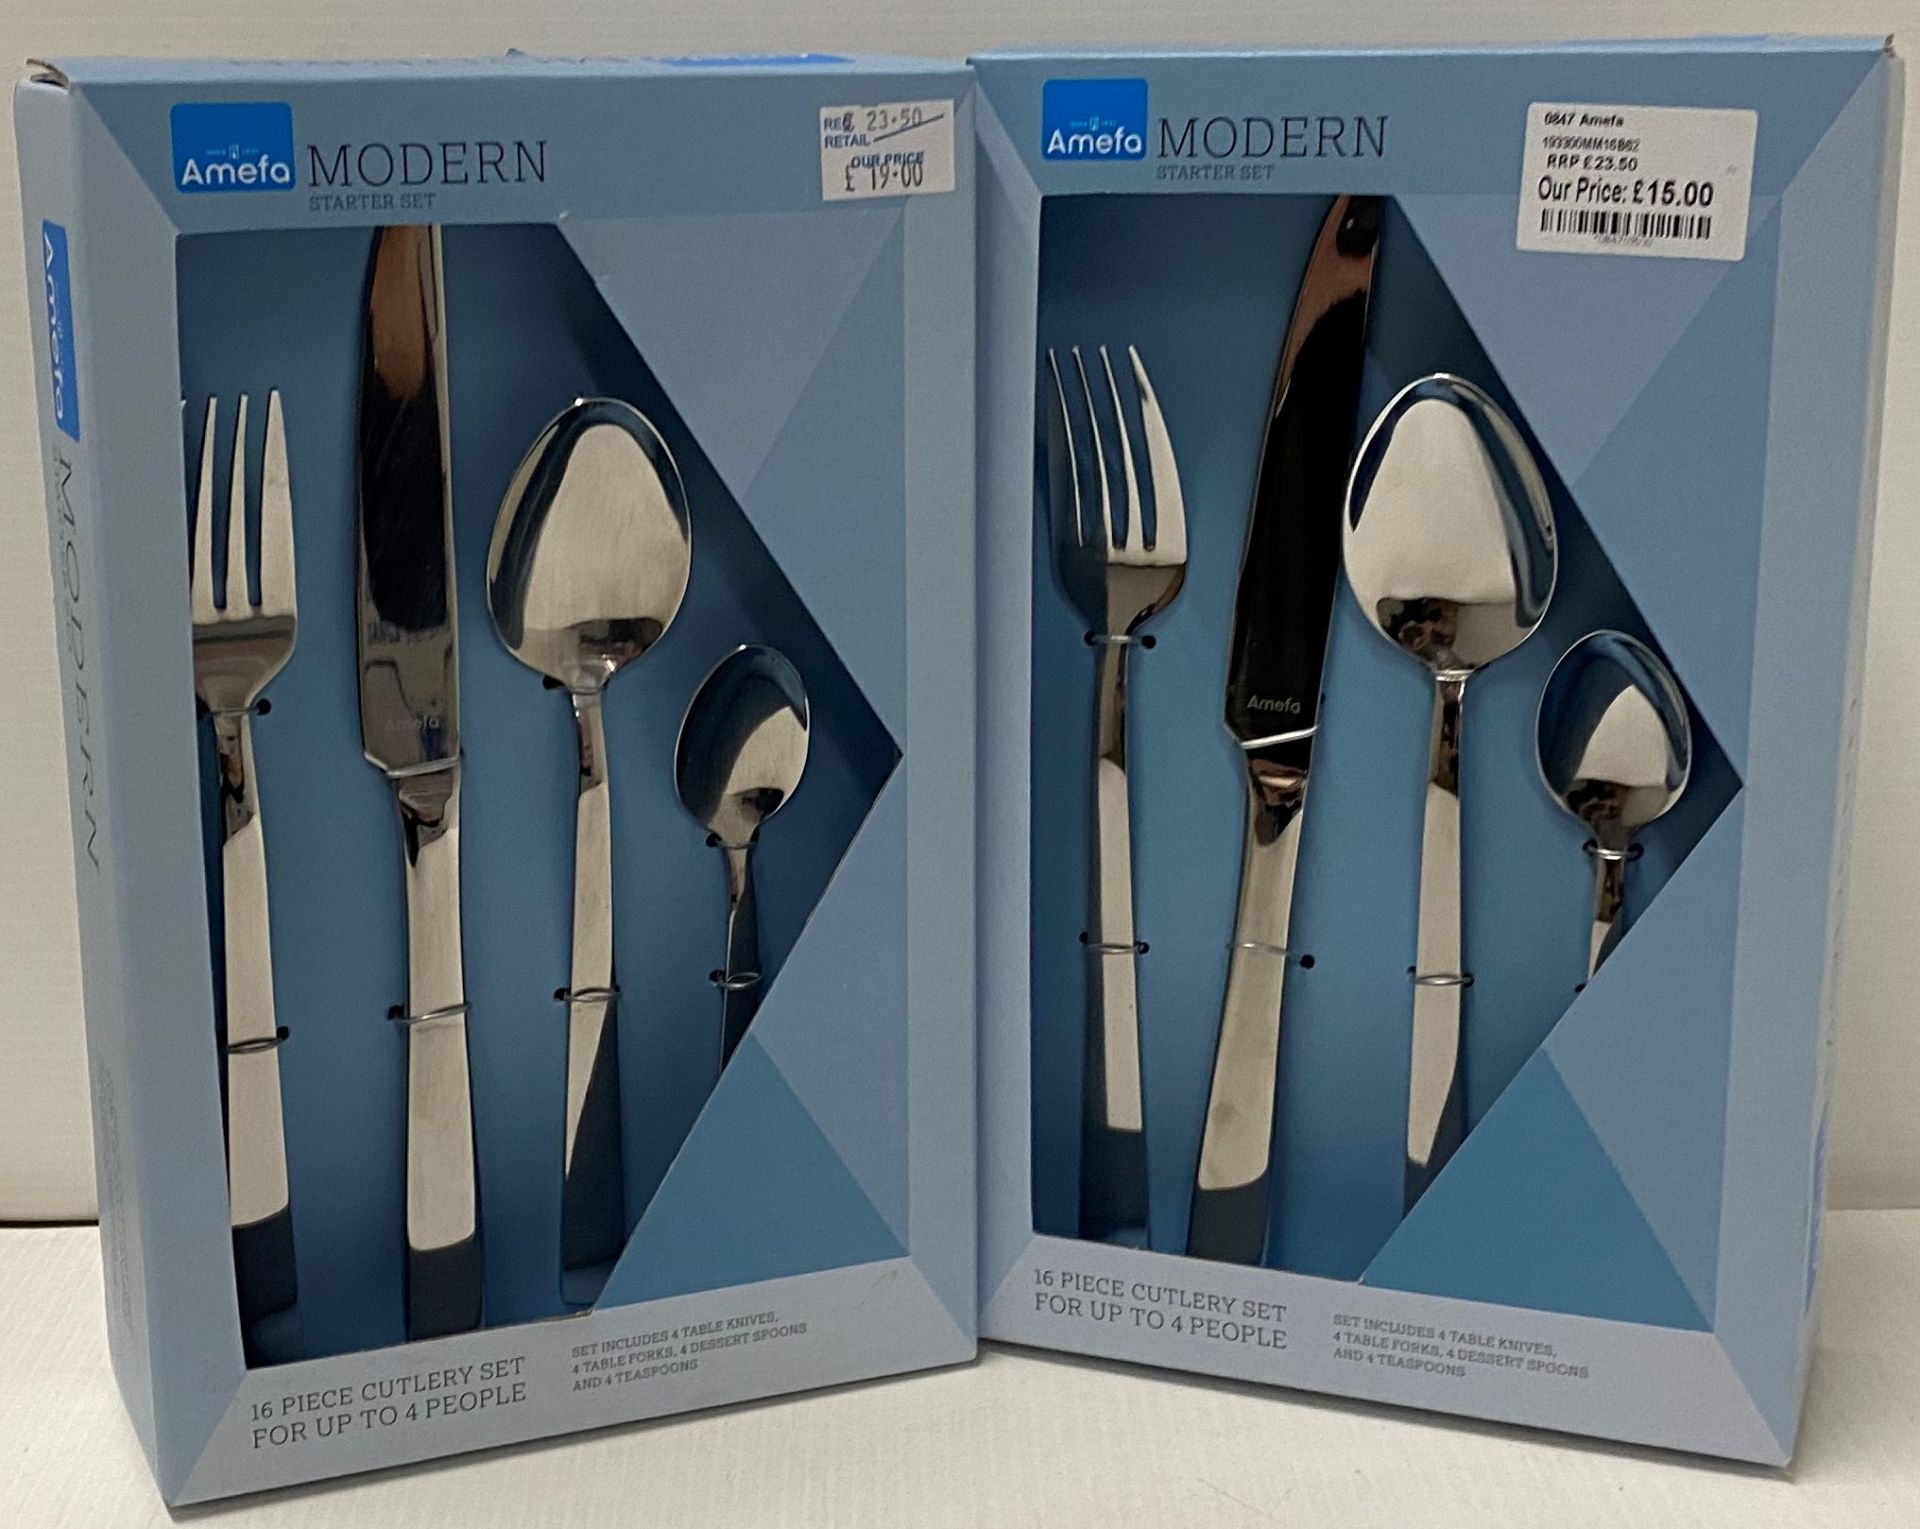 2 x Amefa Modern Bliss 16 piece cutlery starter sets RRP £23.